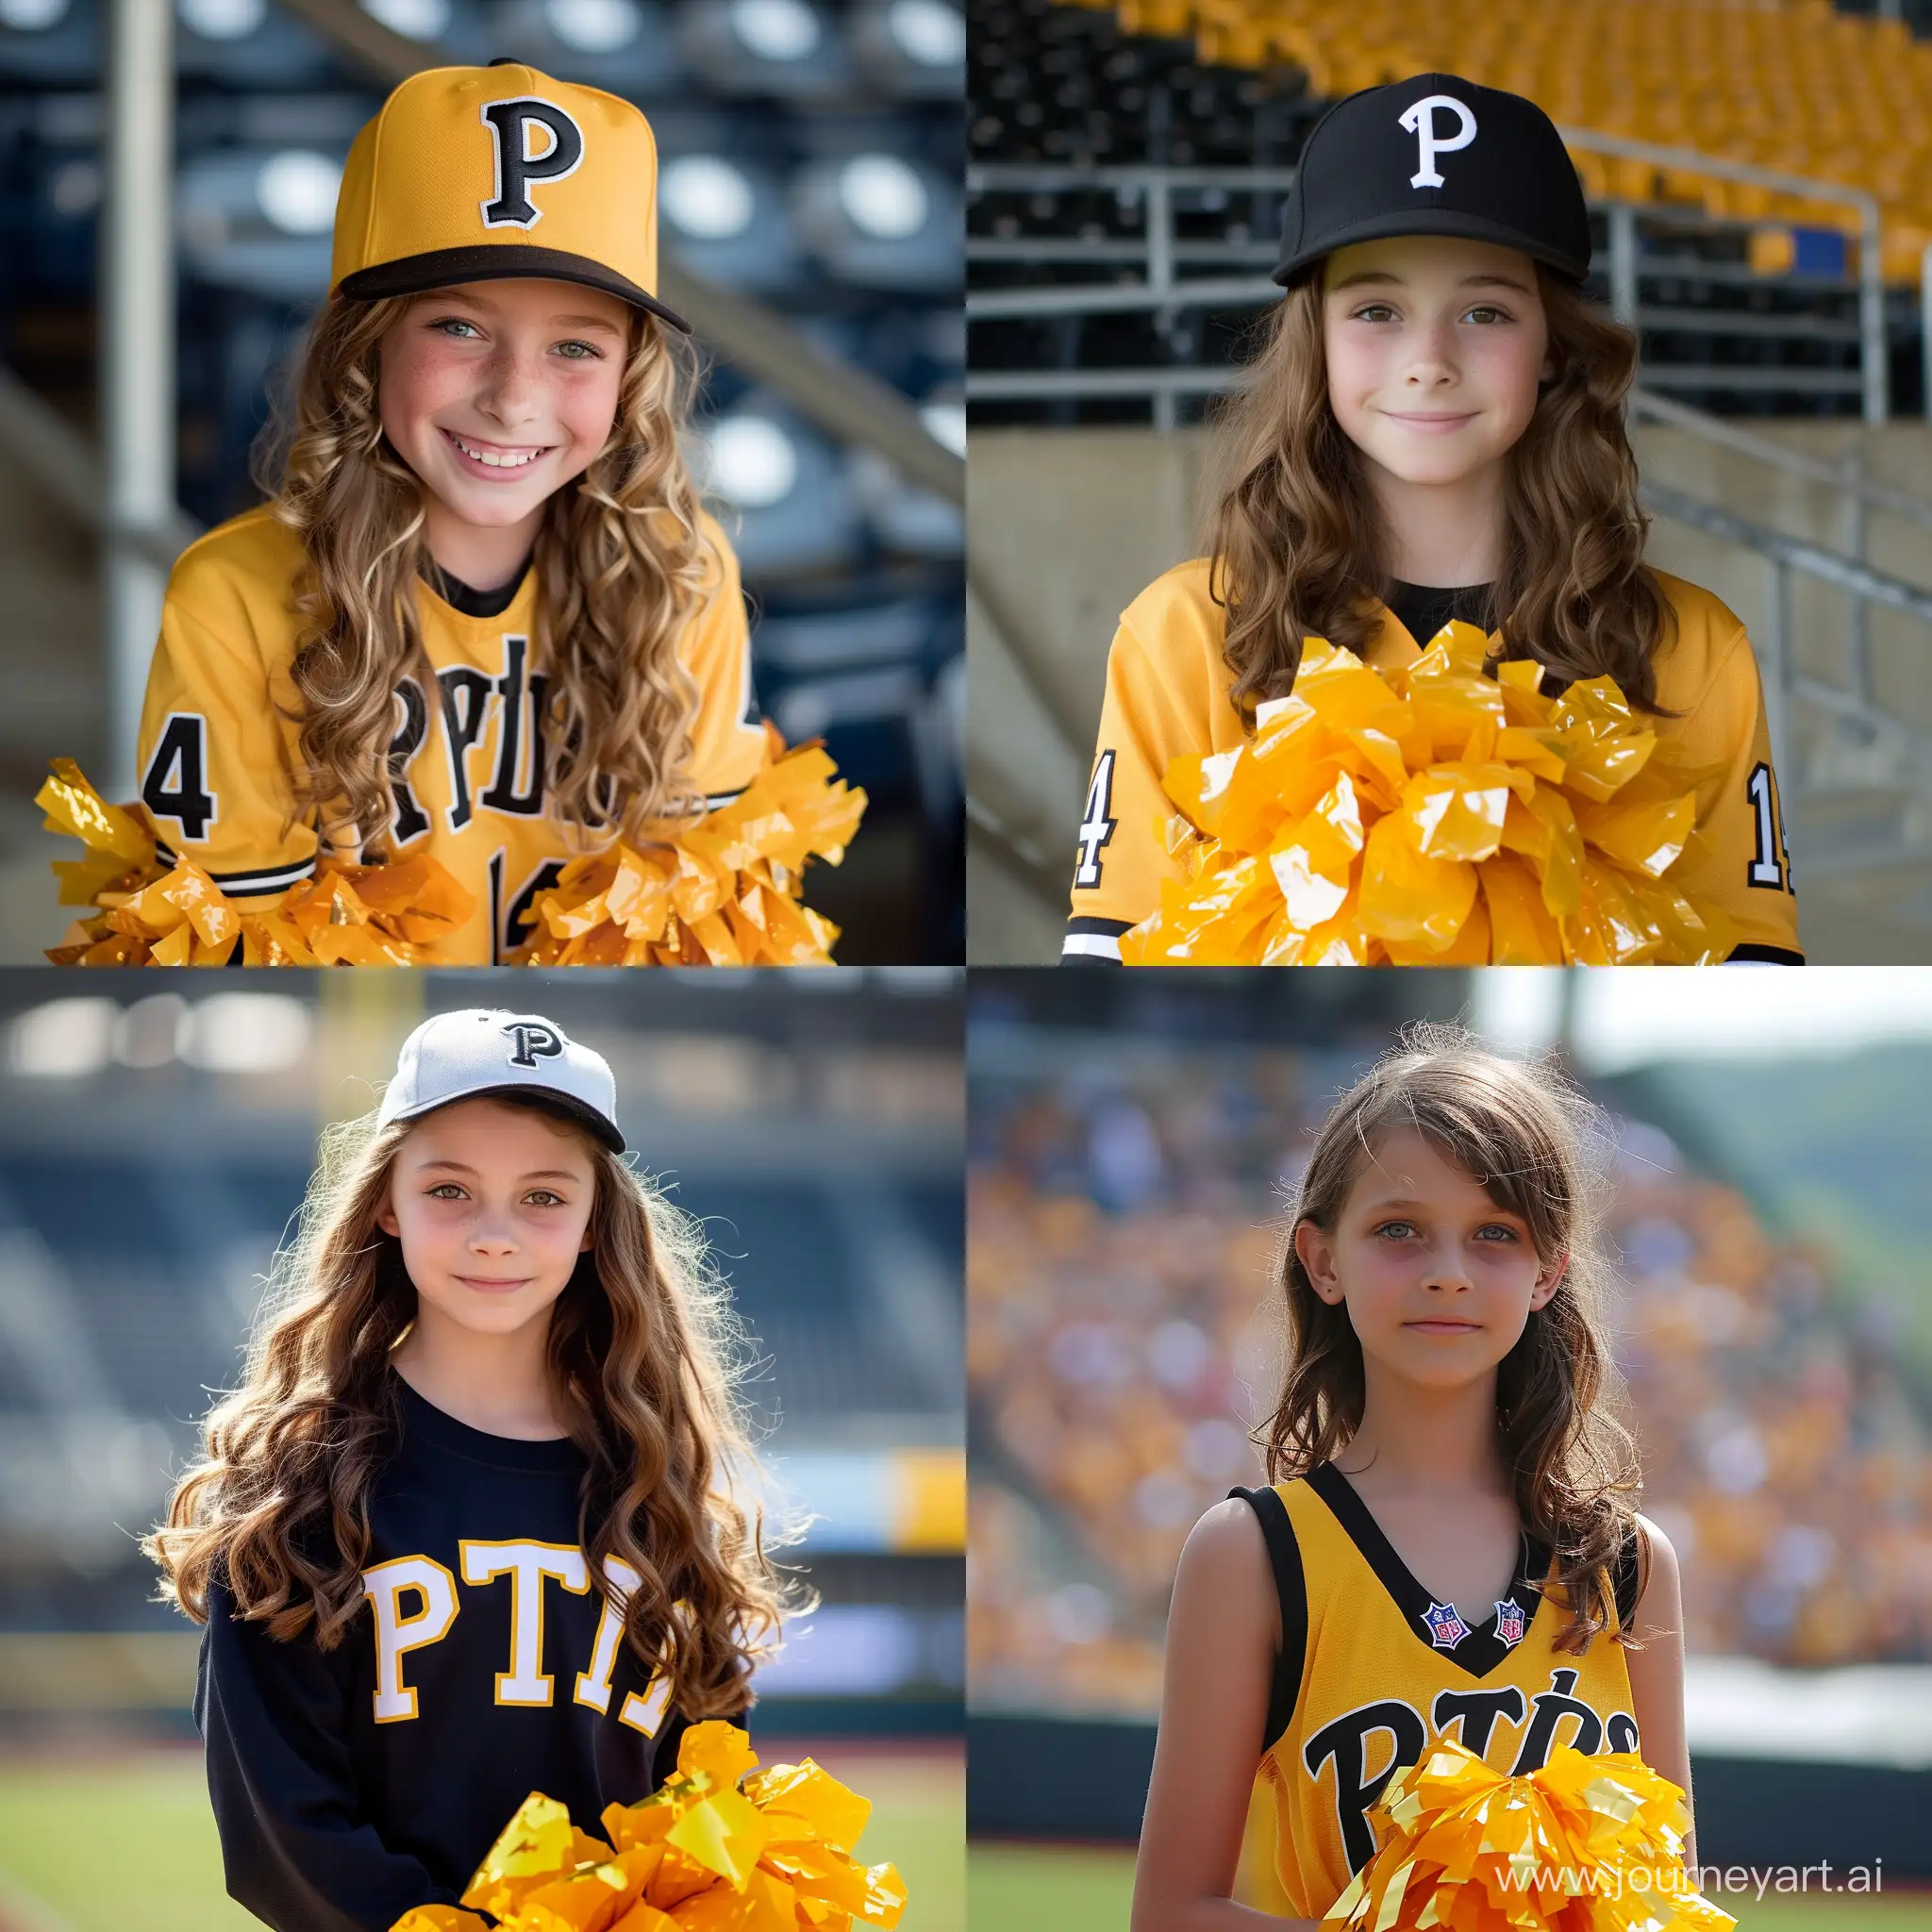 Pittsburgh Pirates 13-14 year old cheerleader